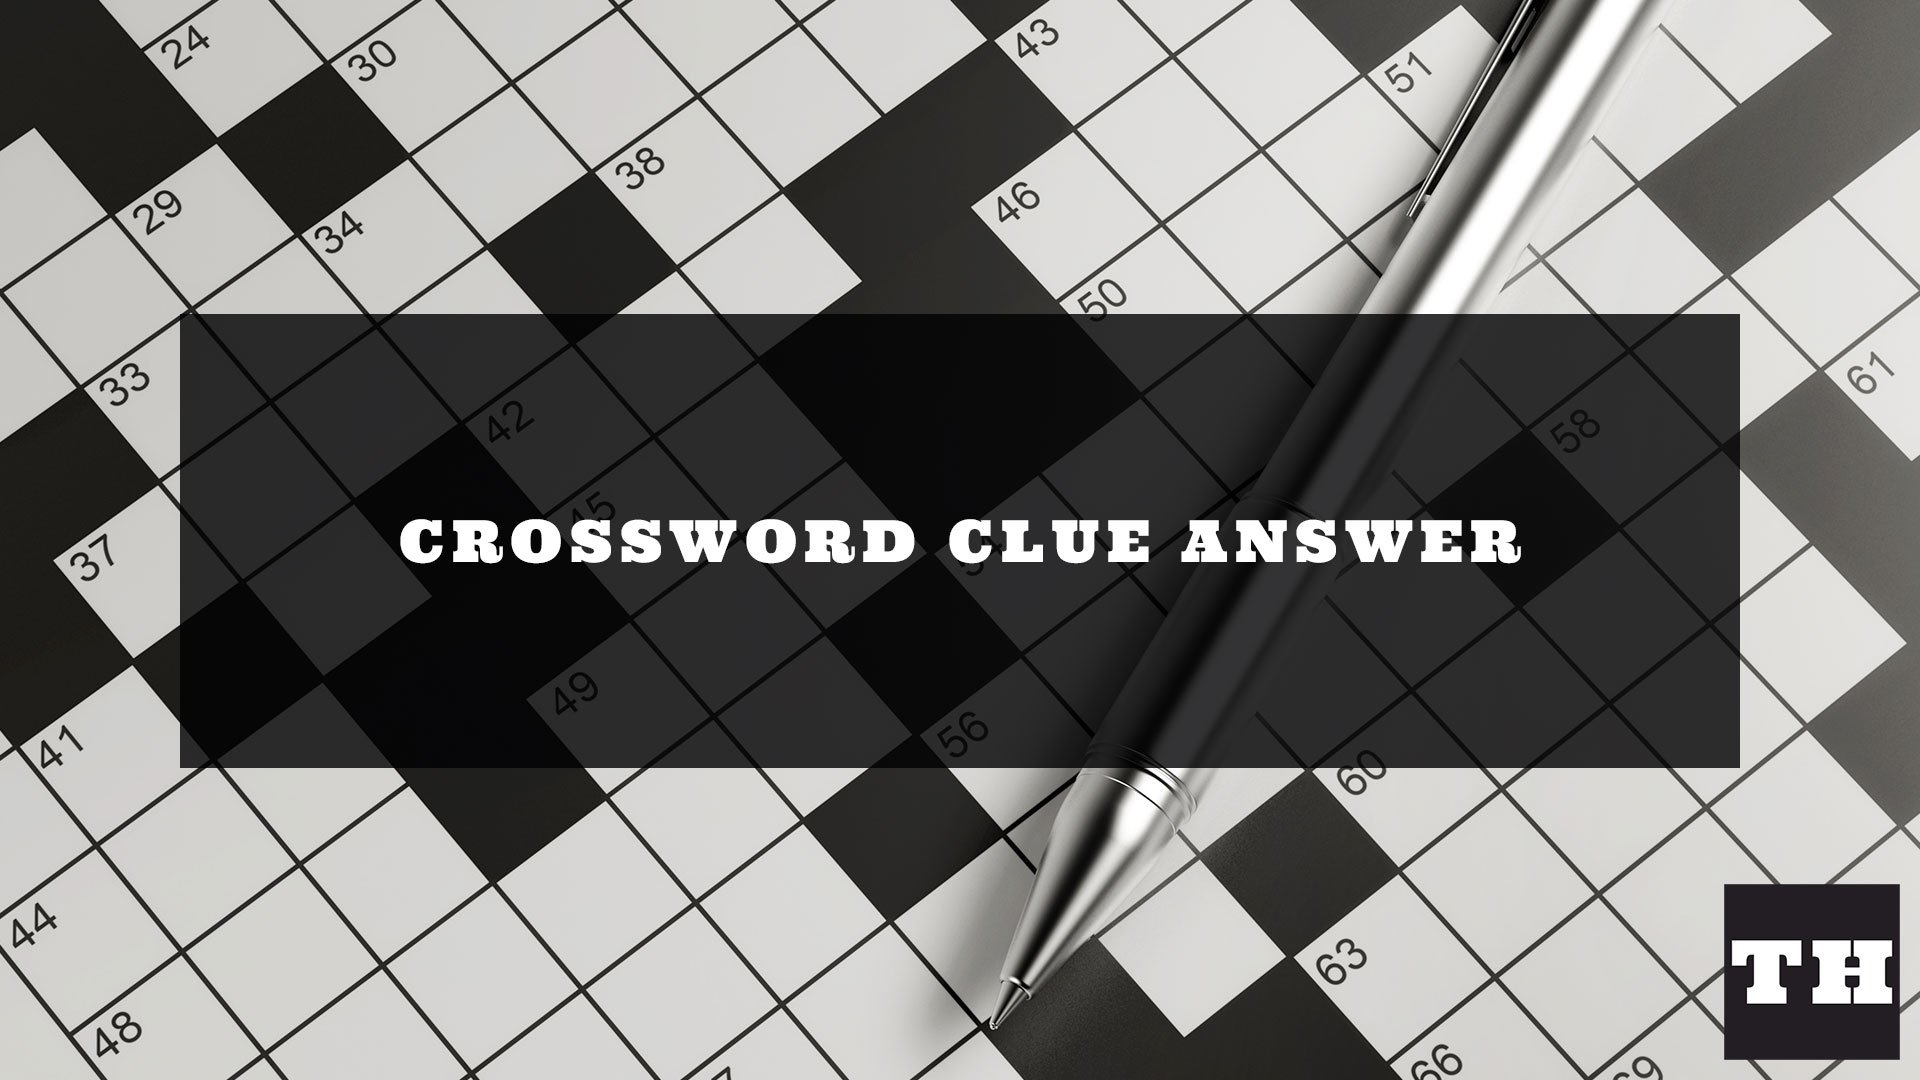 “Just saying . . .” Crossword Clue